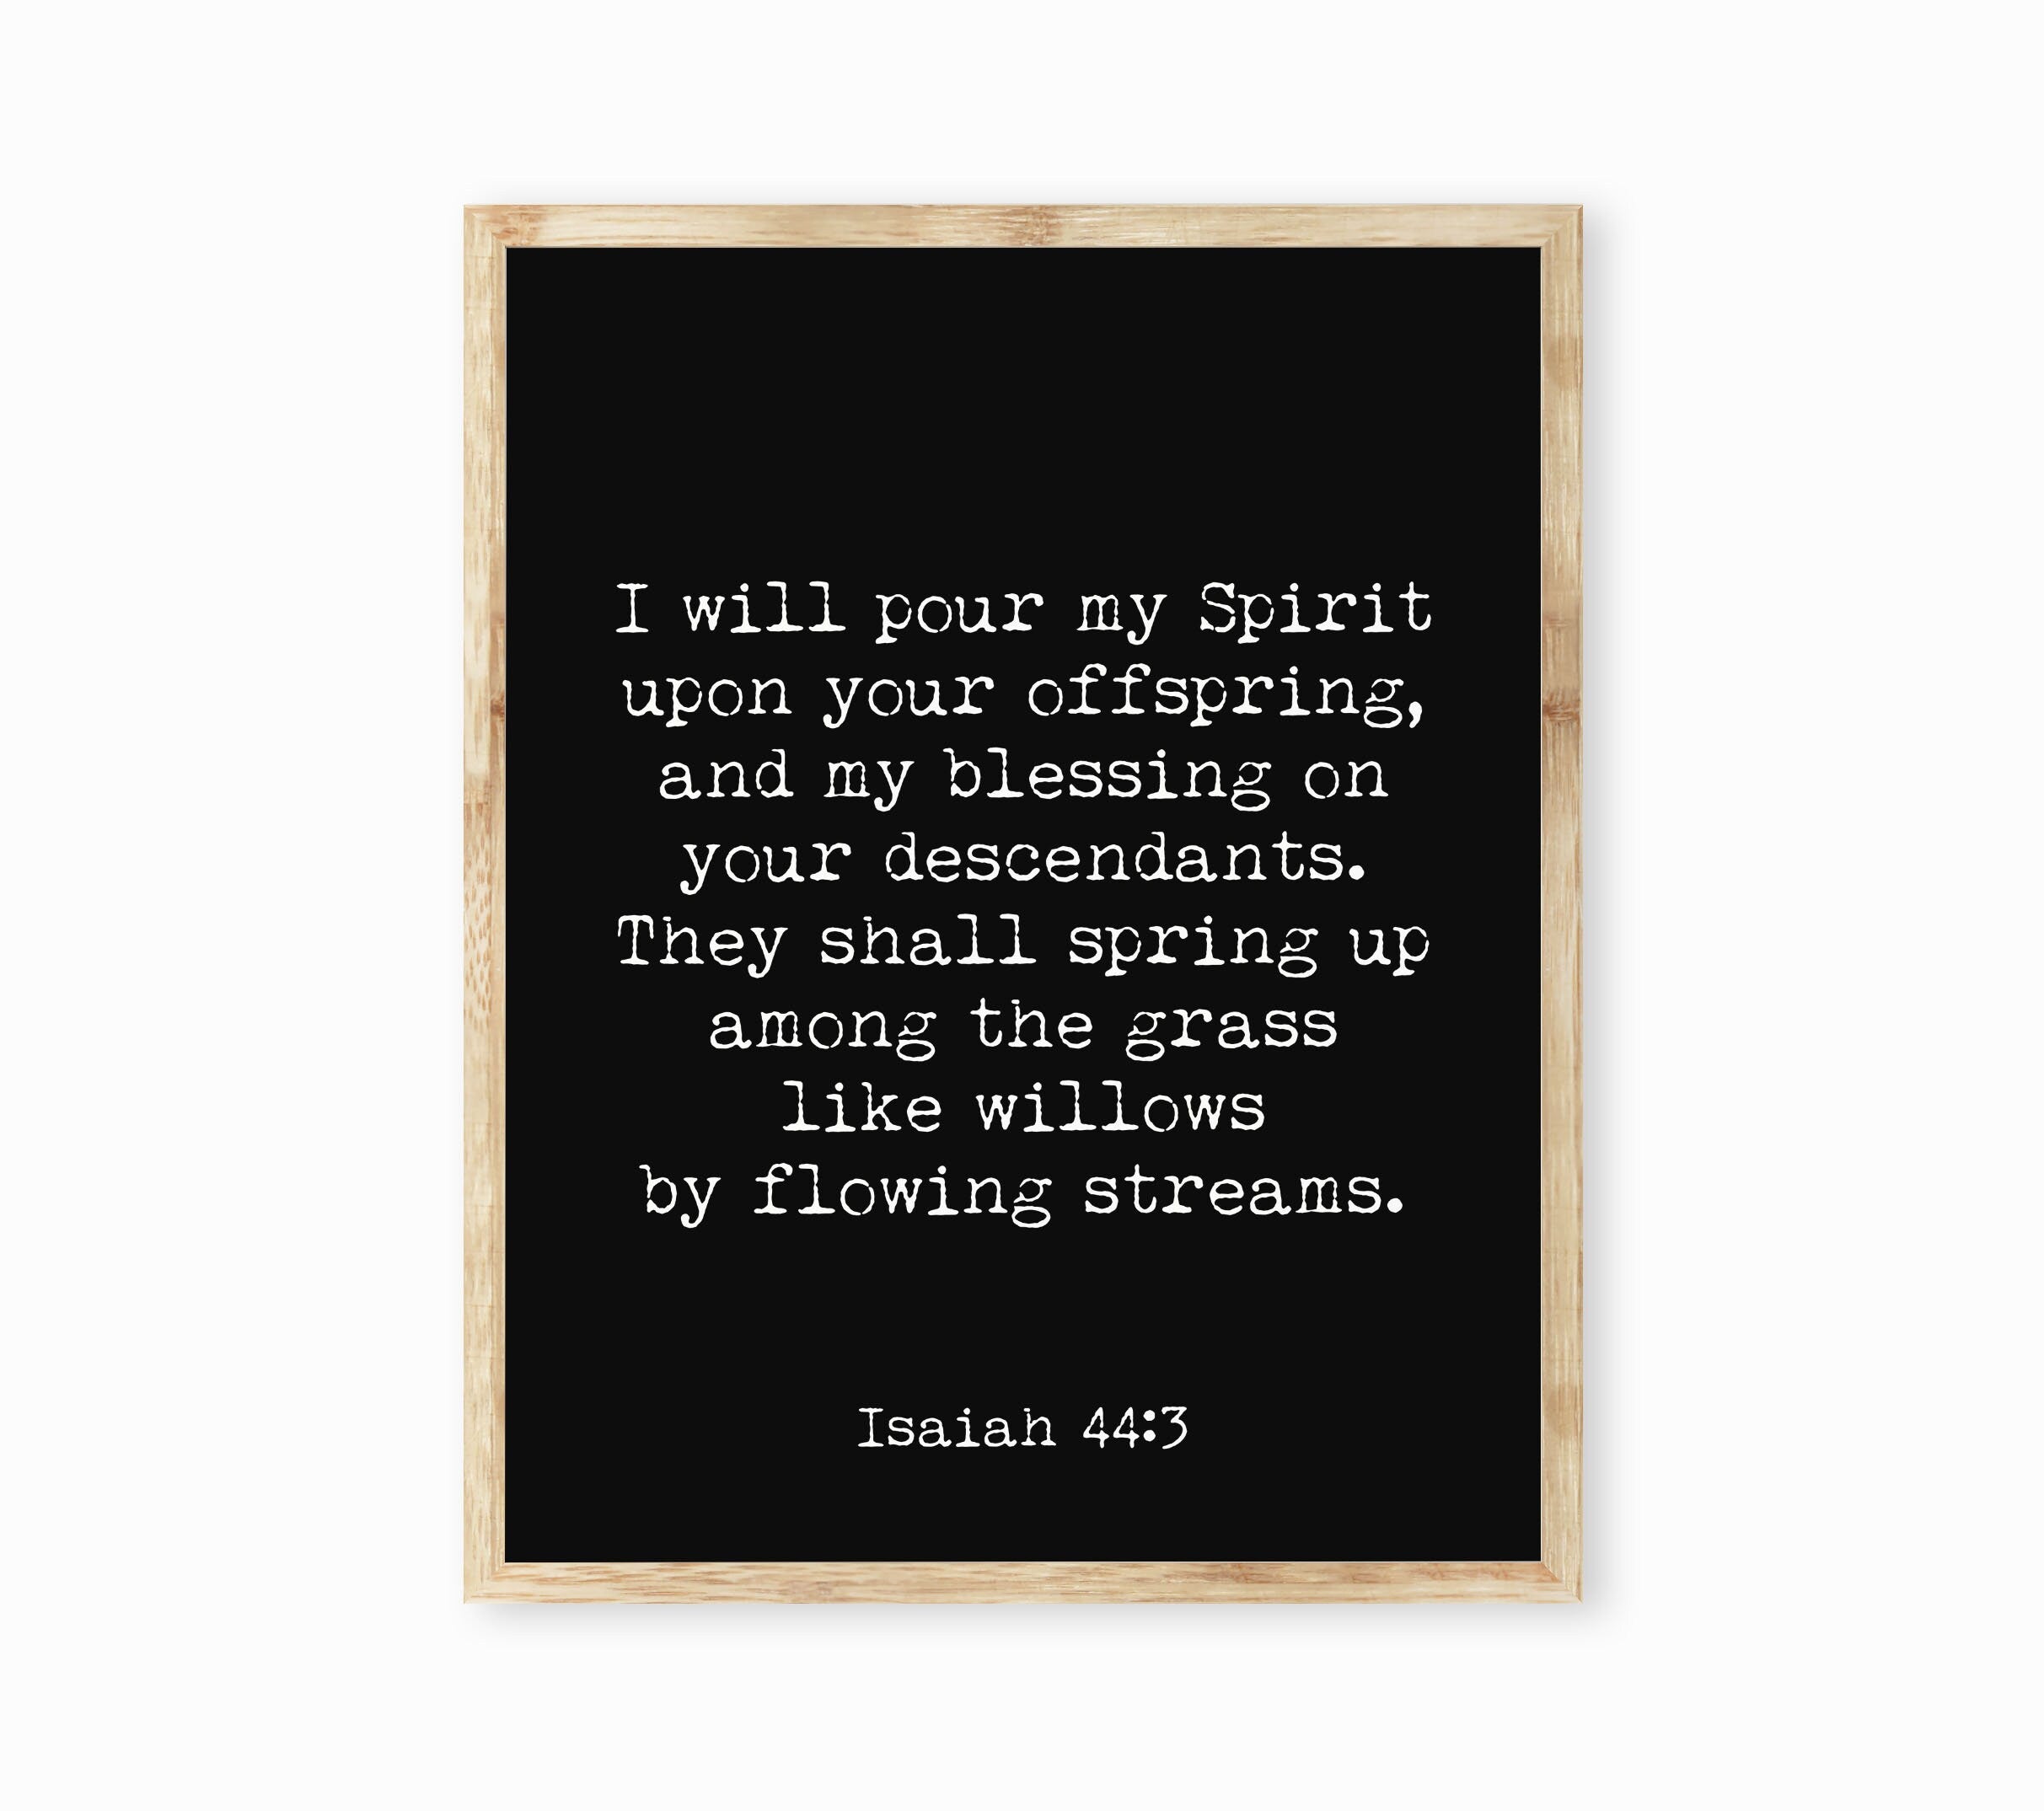 Isaiah 44:3 Bible Verse Print, Inspirational Gift Wall Art in Black & White